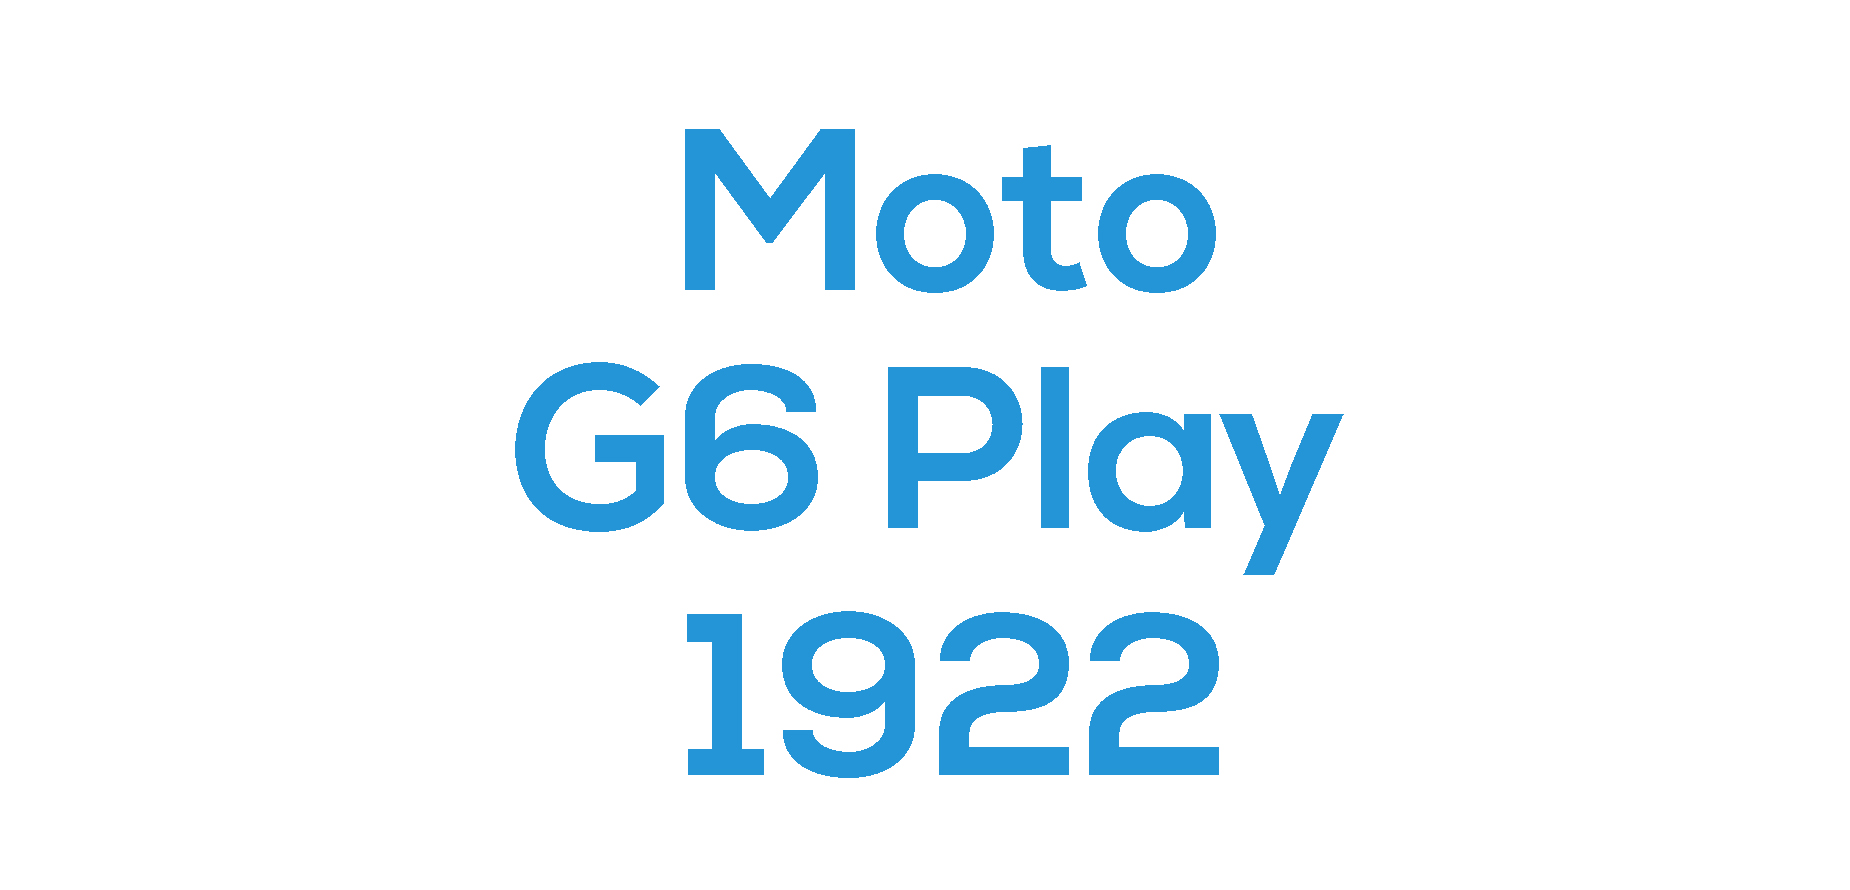 G6 Play 2018 (XT1922)